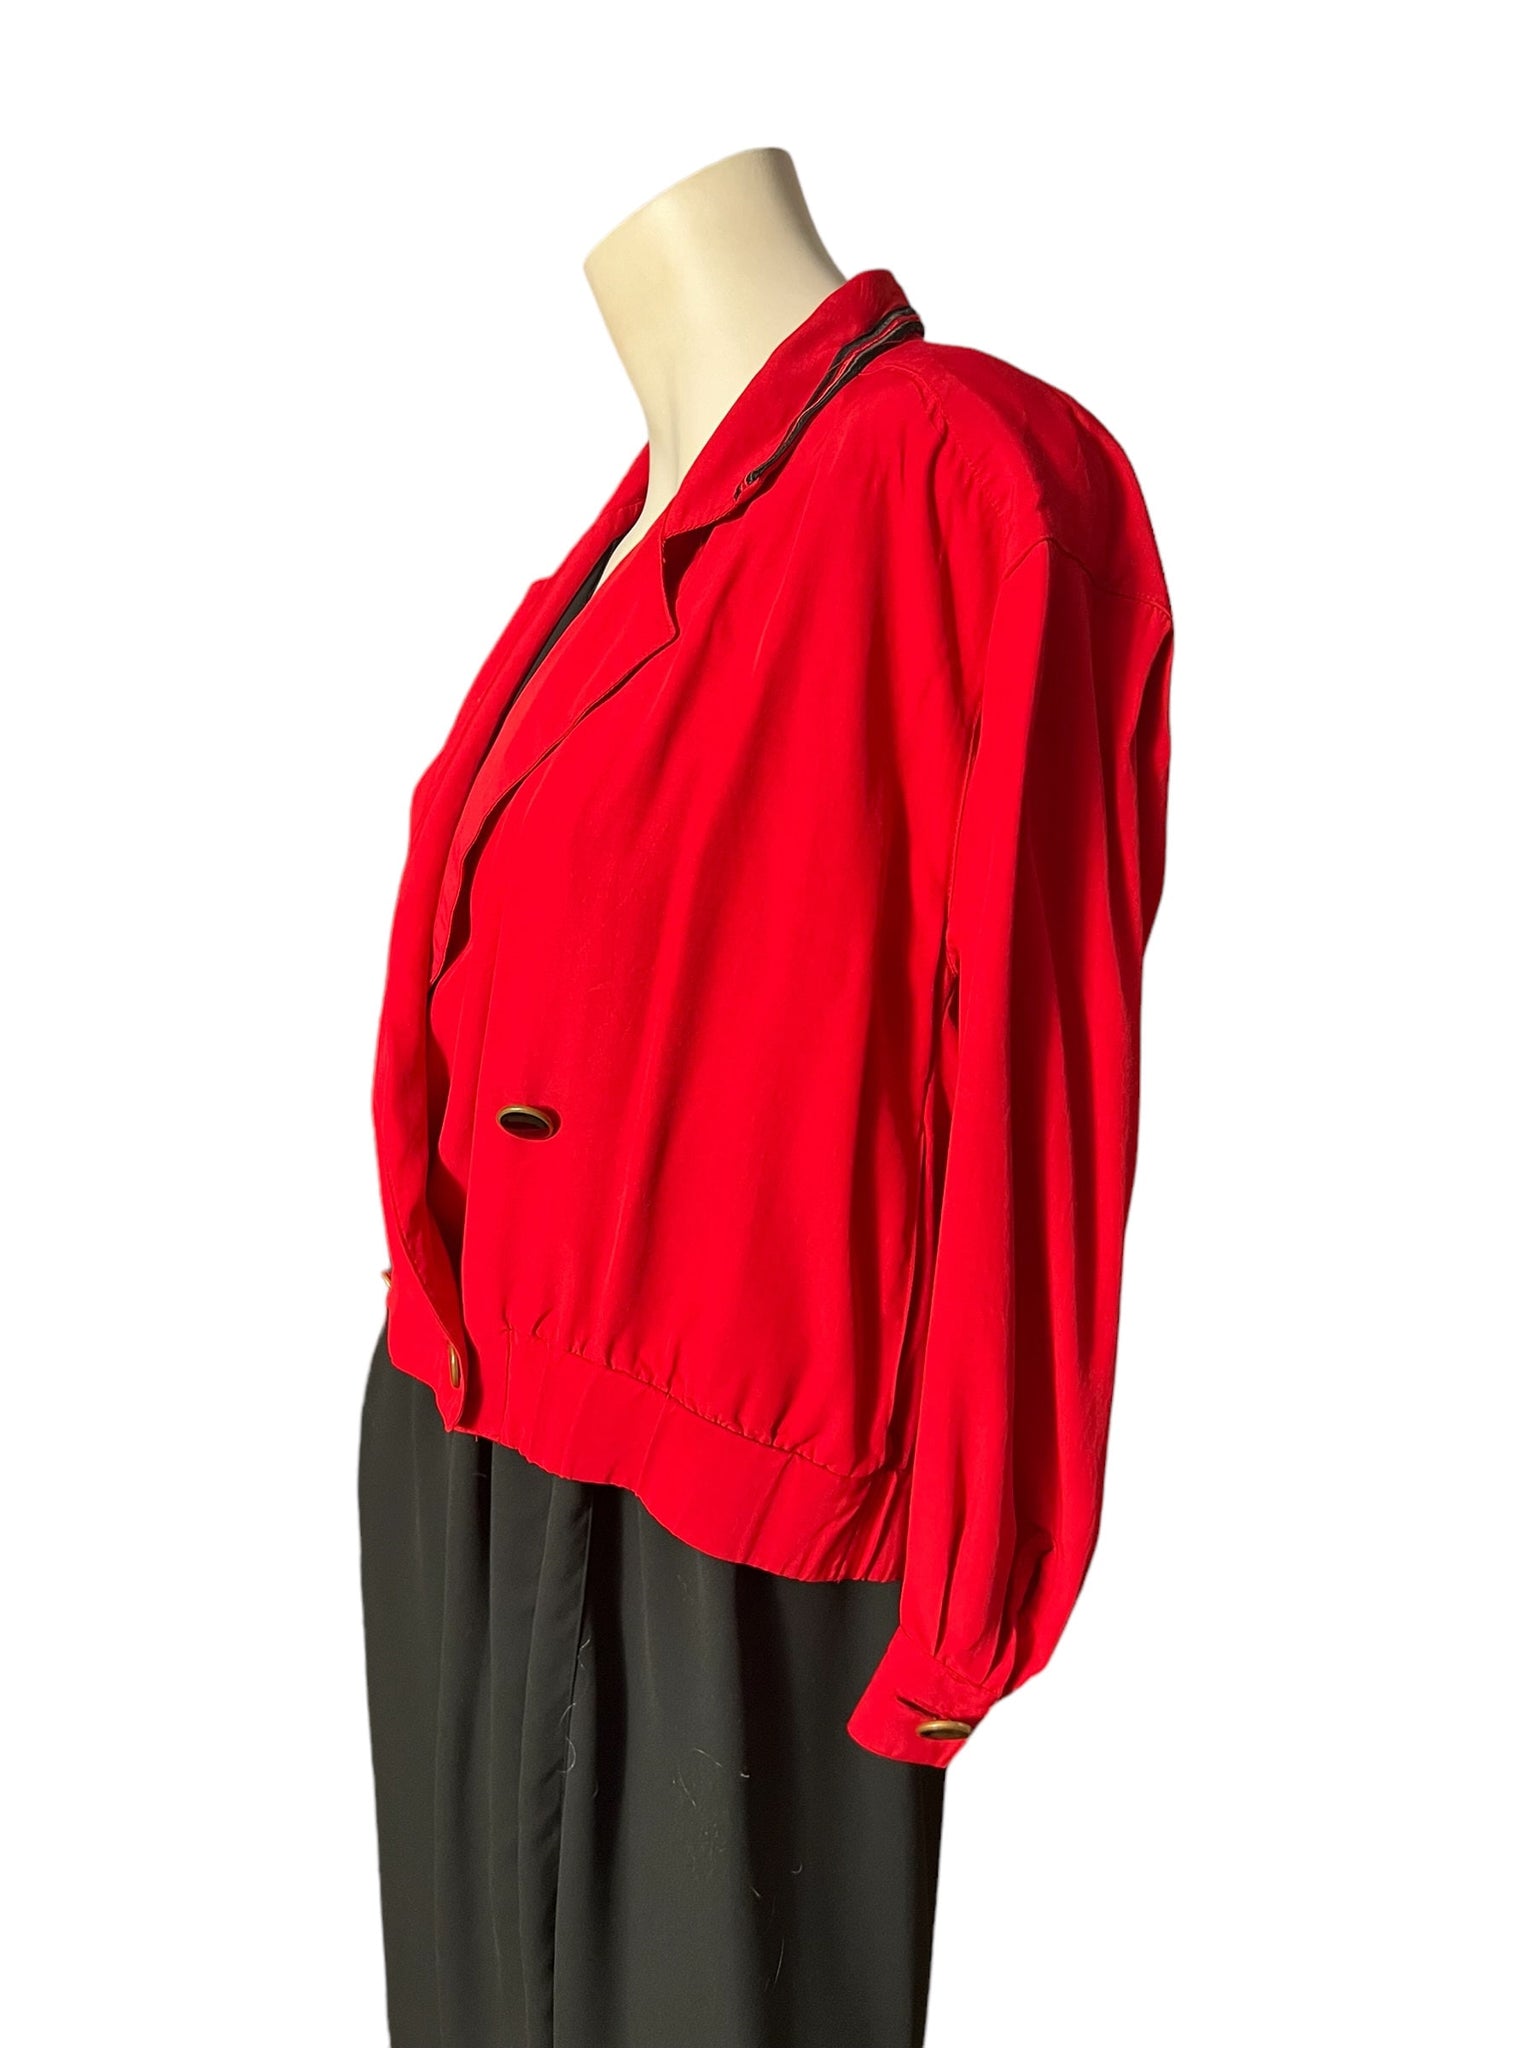 Vintage 80's red & black jacket petite 4 Leslie Fay